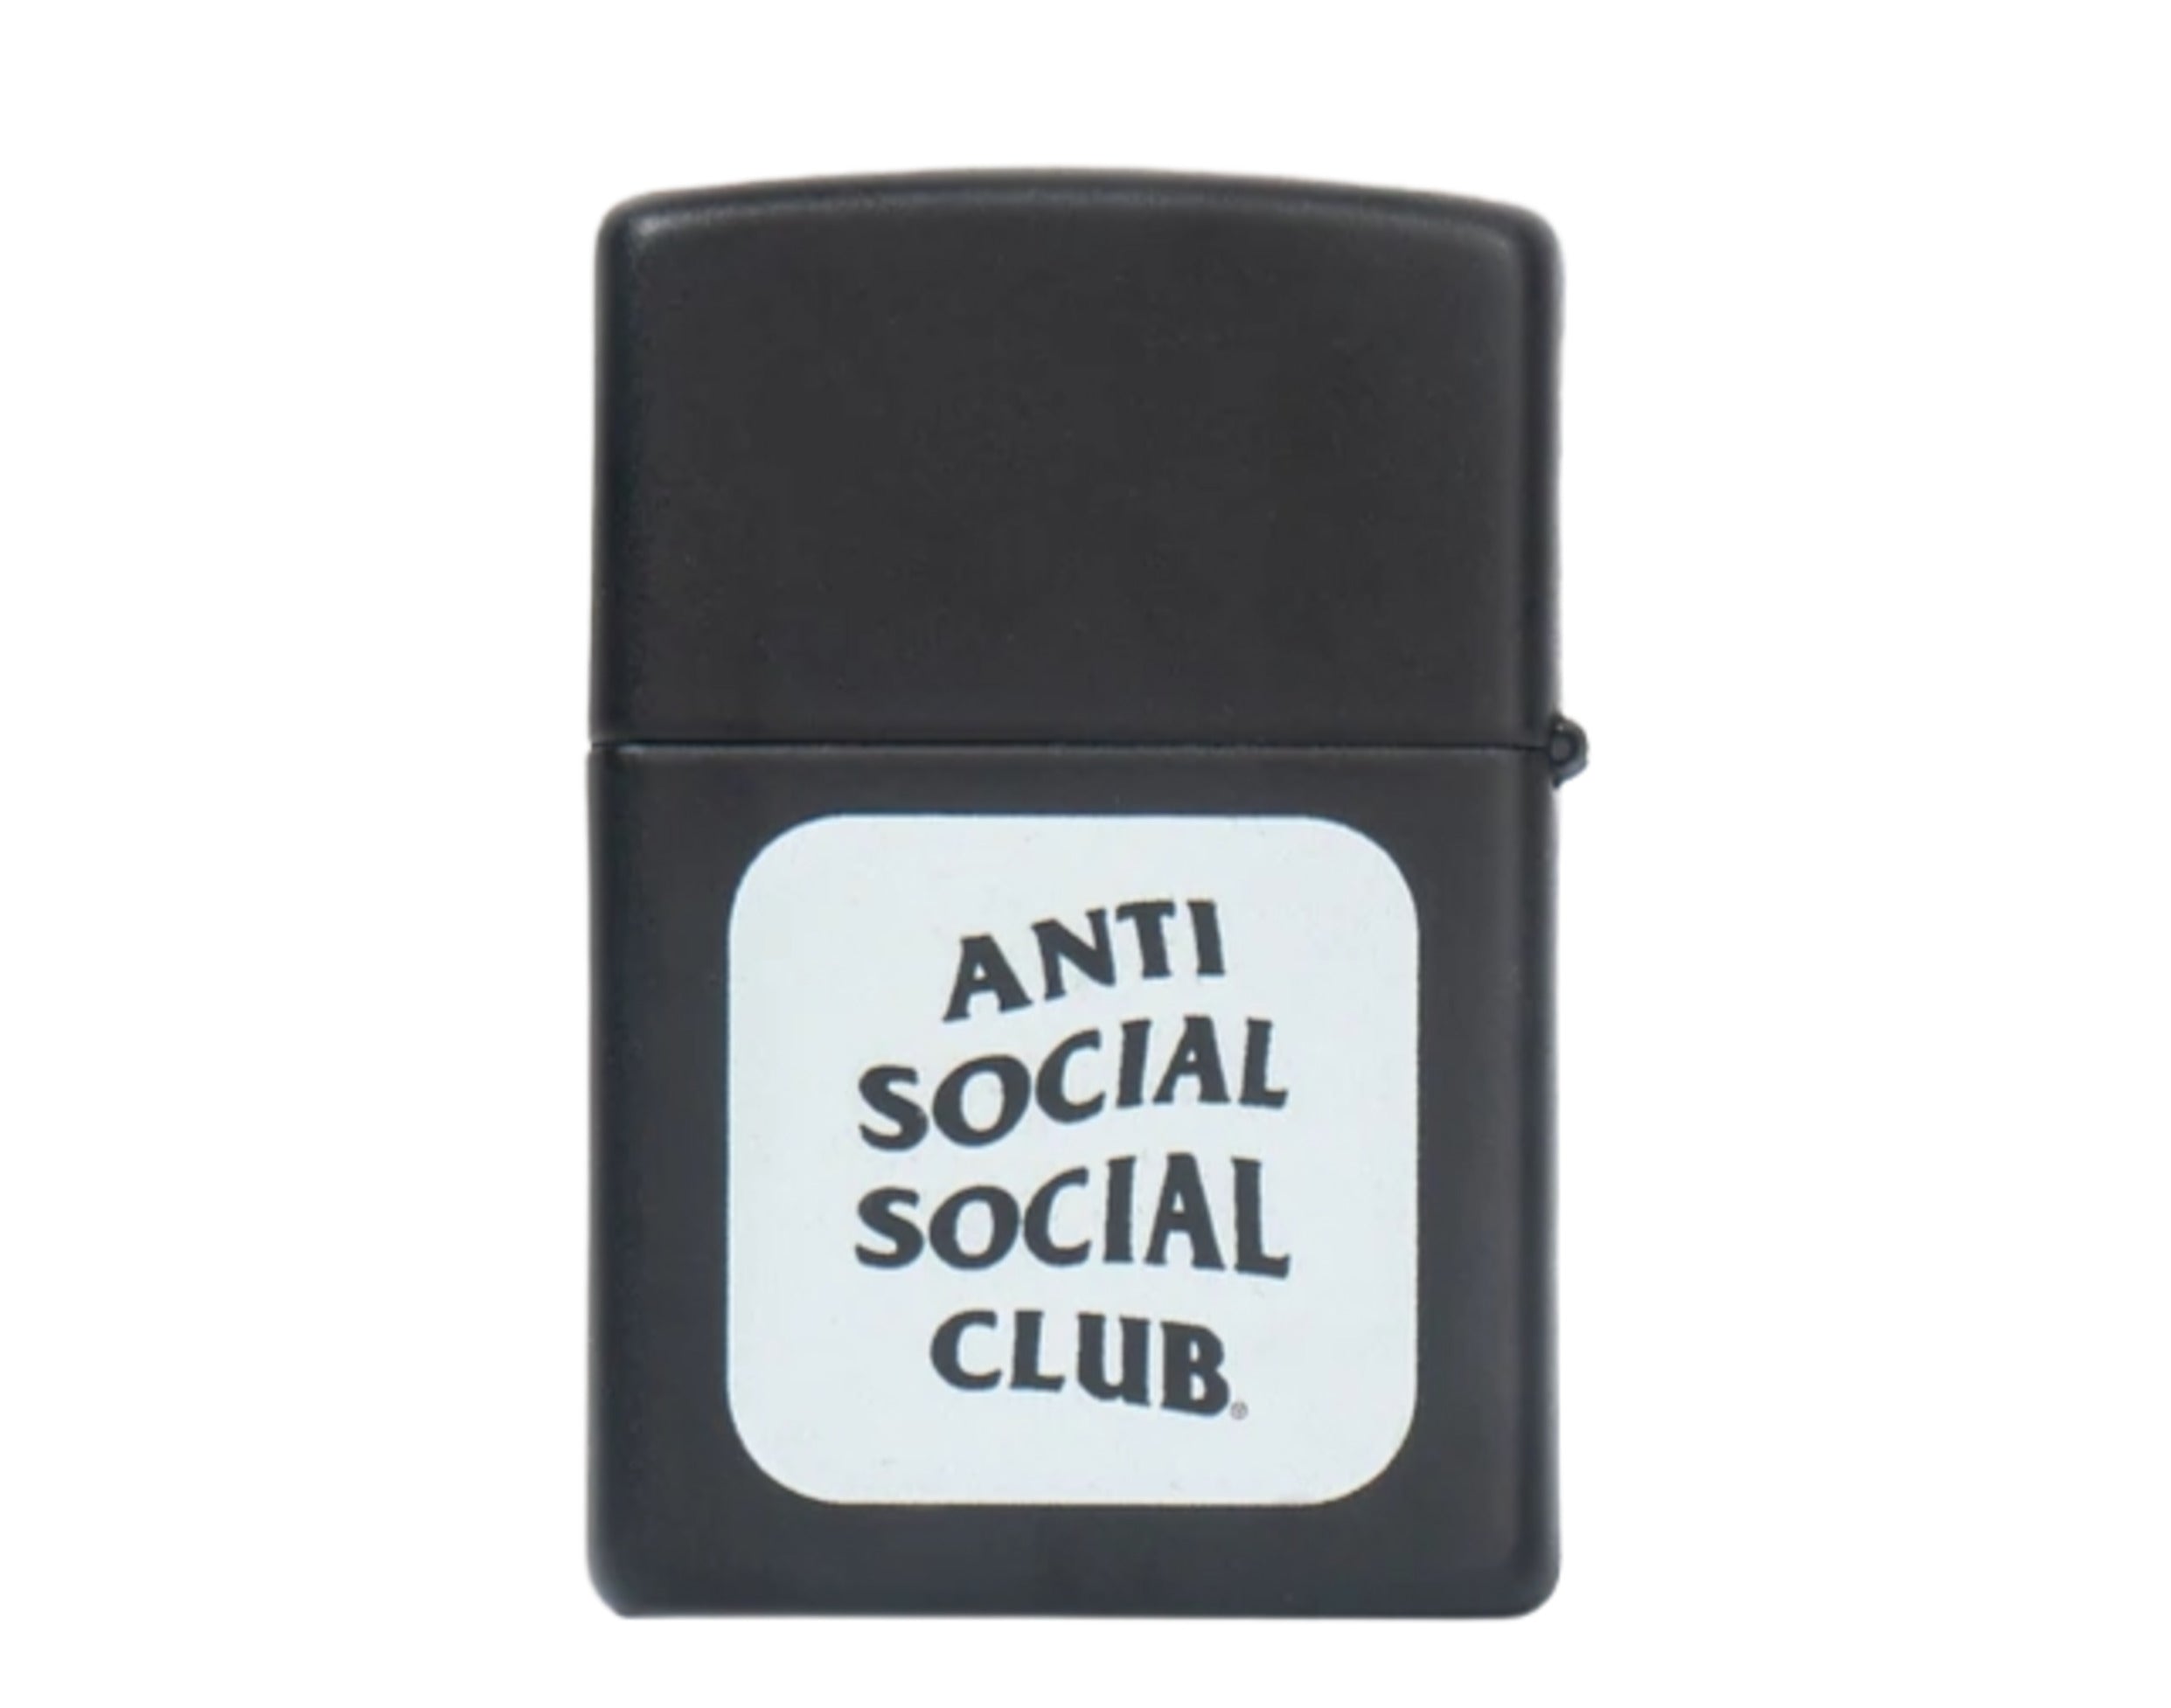 anti social social club ZIppo Lighter